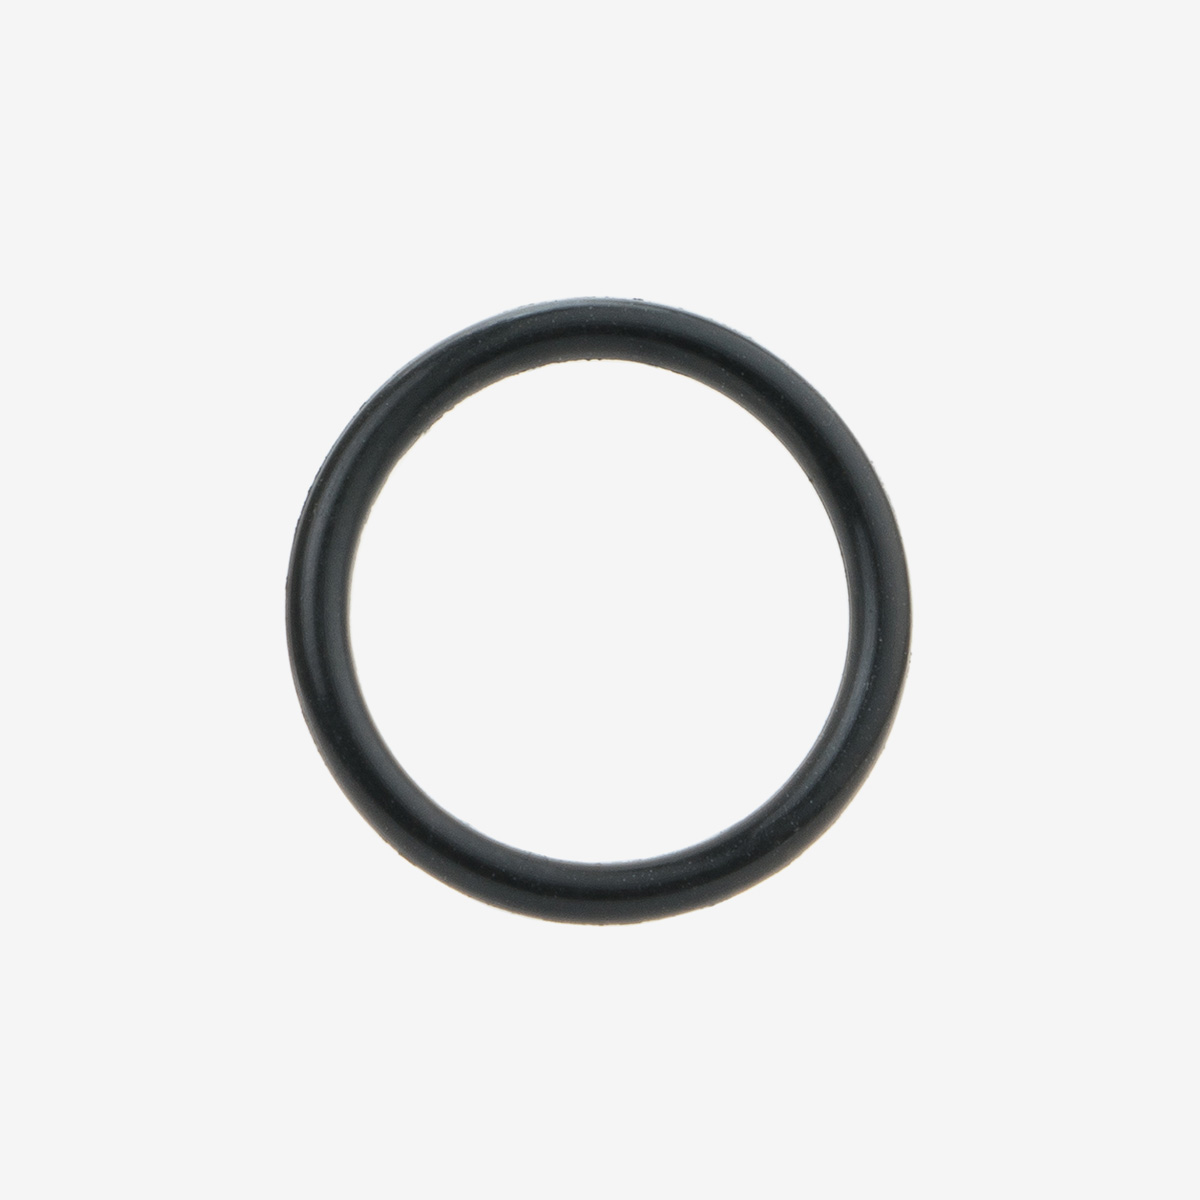 Black NBR 70 O-ring on white background